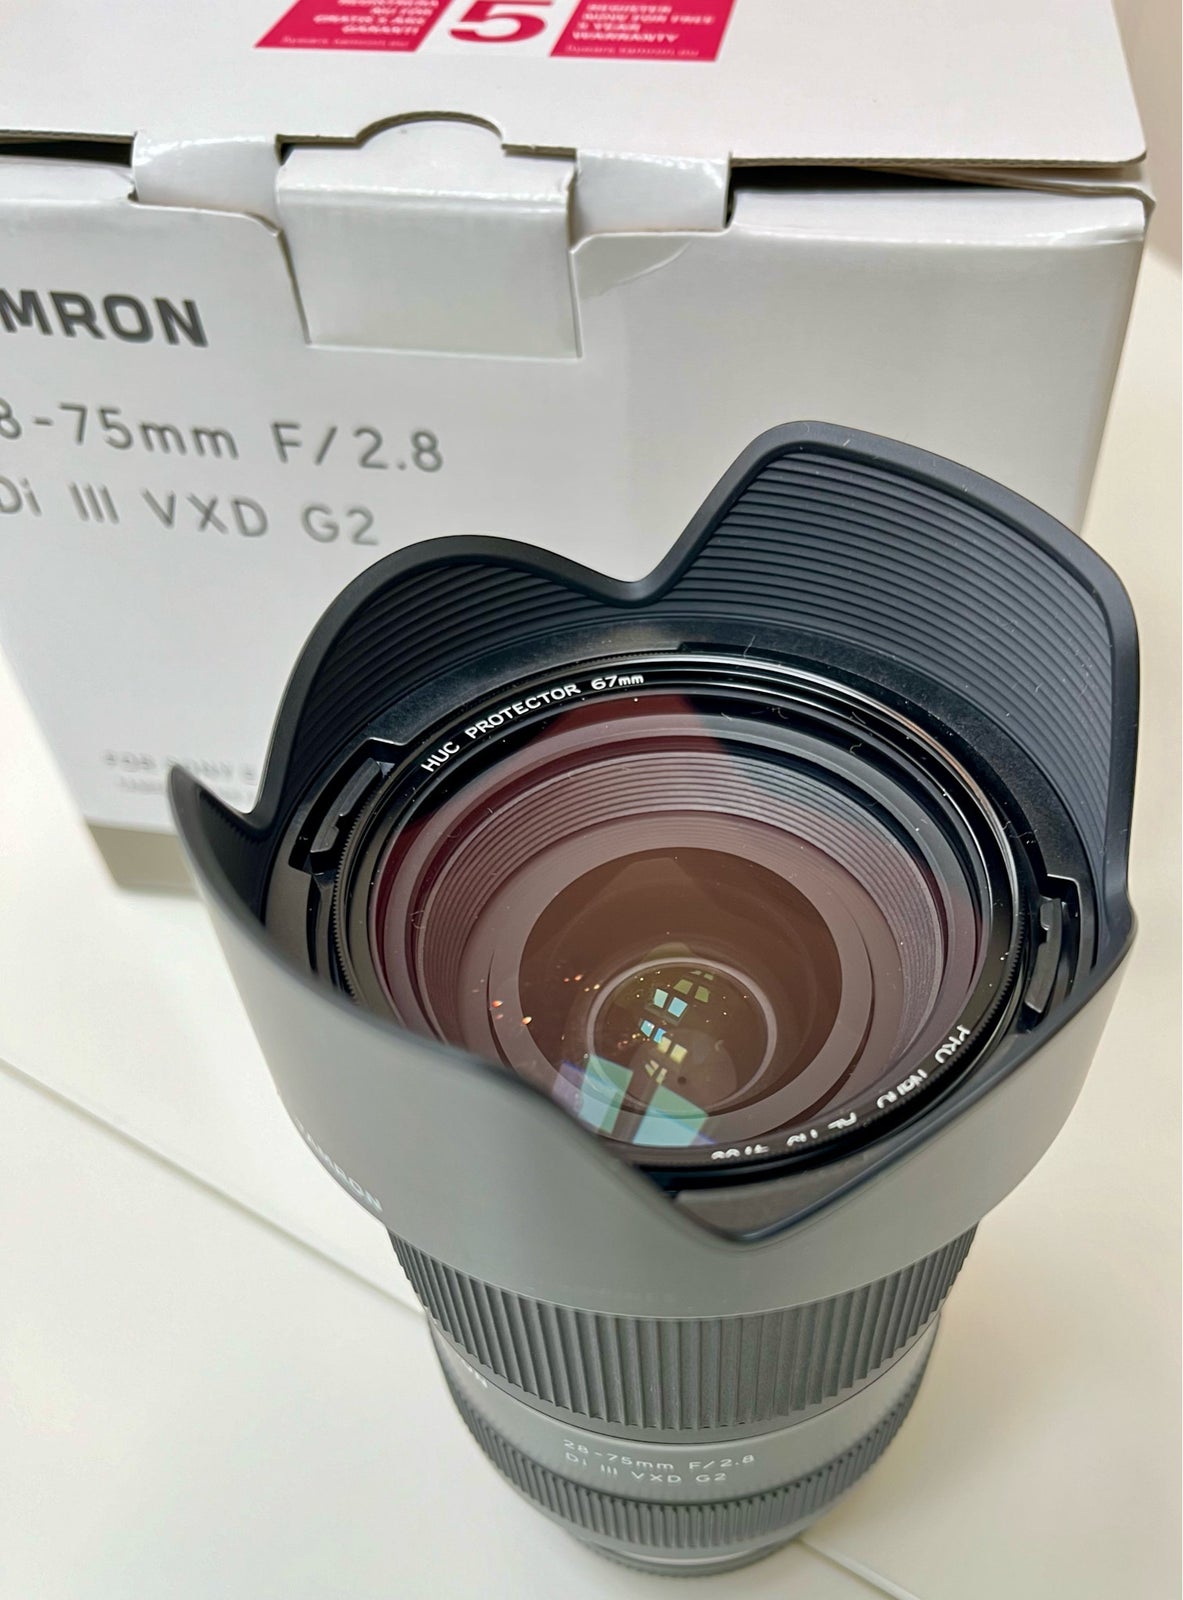 zoom , Tamron, 28-75mm f/2.8 Di lll VDX G2 Sony FE